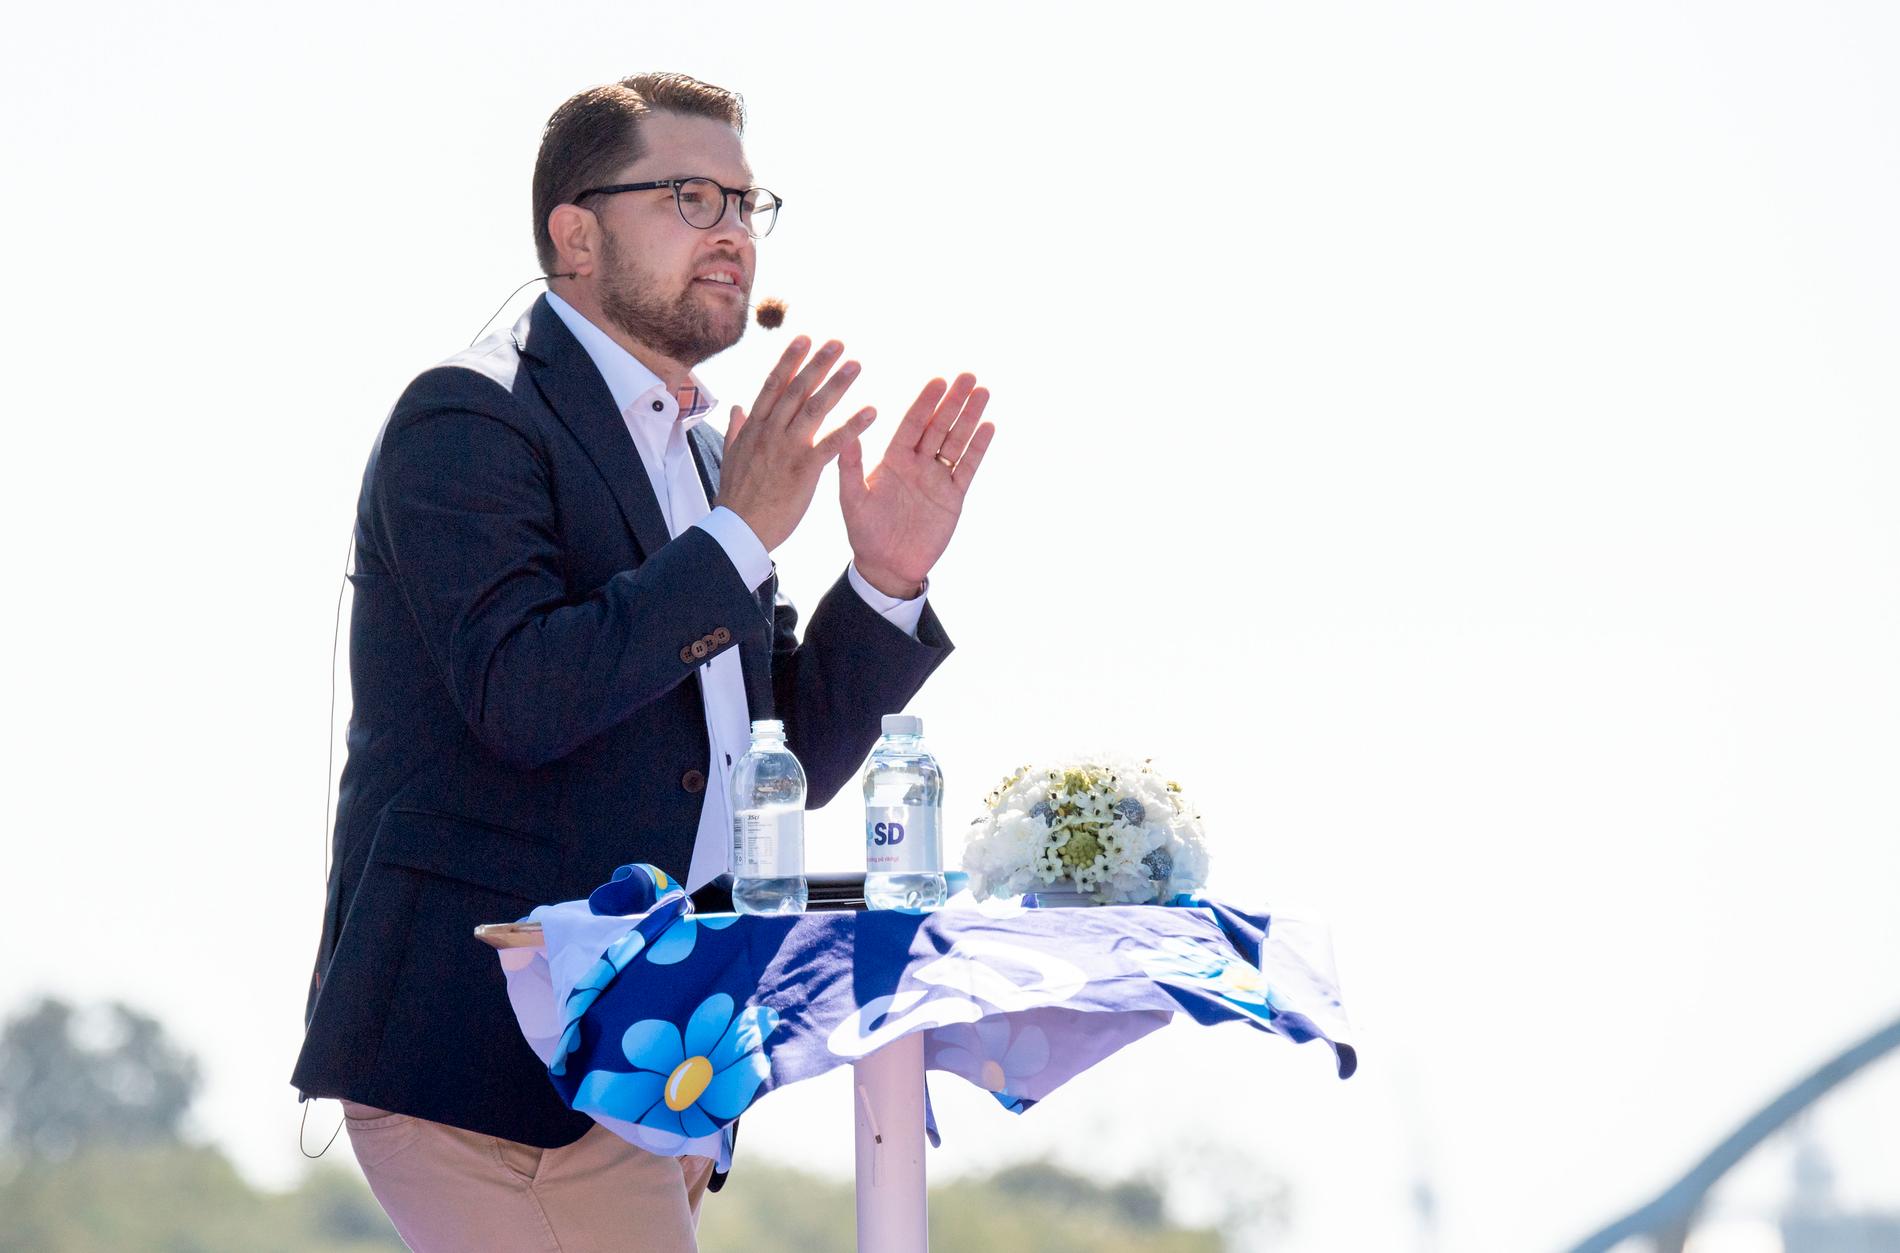 Sverigedemokraternas partiledare Jimmie Åkesson vid partiets sommarfestival i Sölvesborg i augusti. Arkivbild.